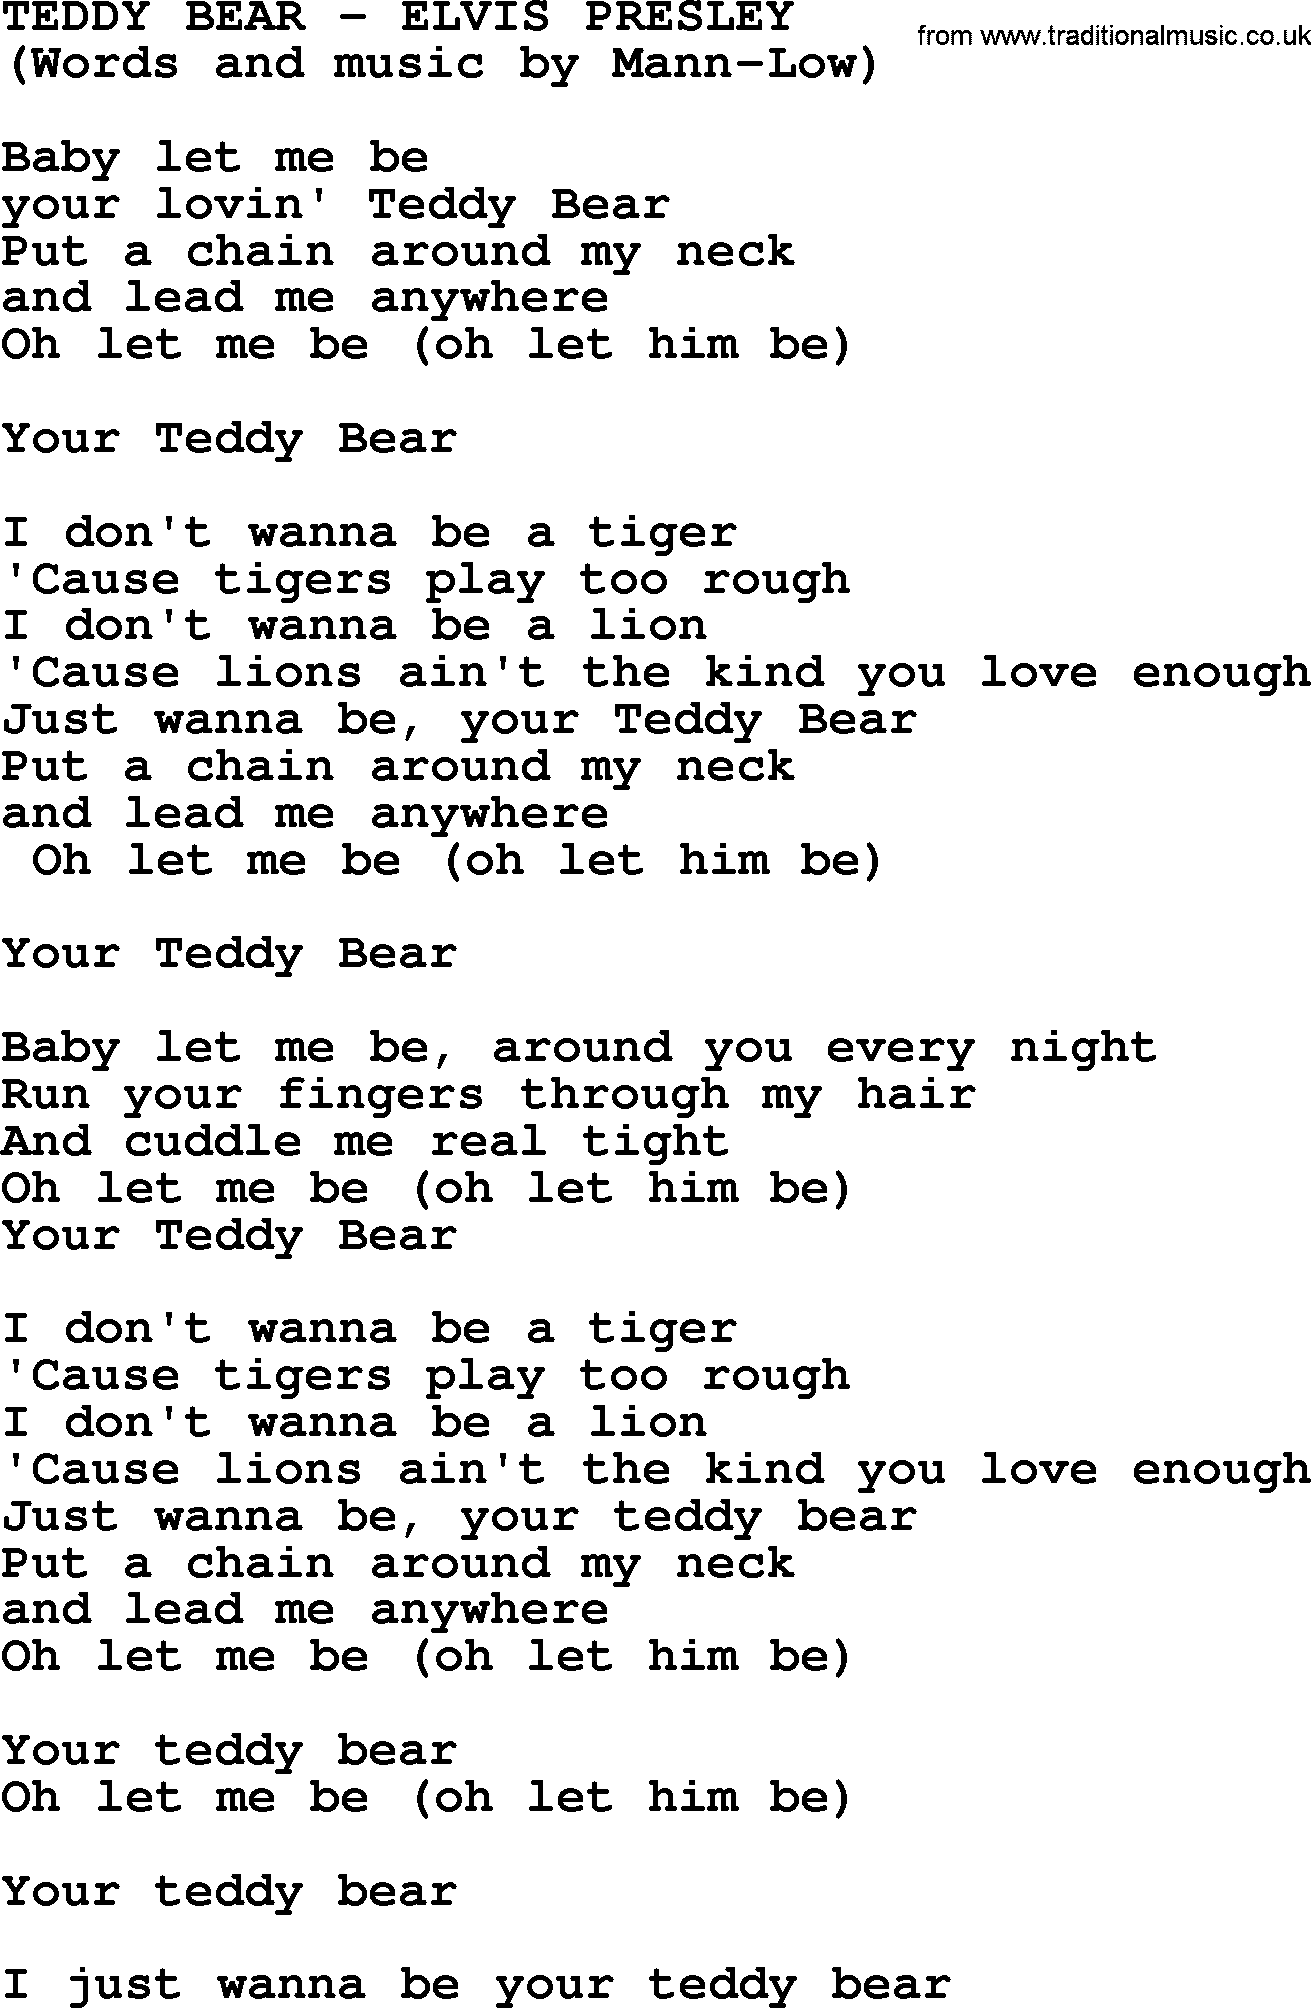 Elvis Presley song: Teddy Bear lyrics